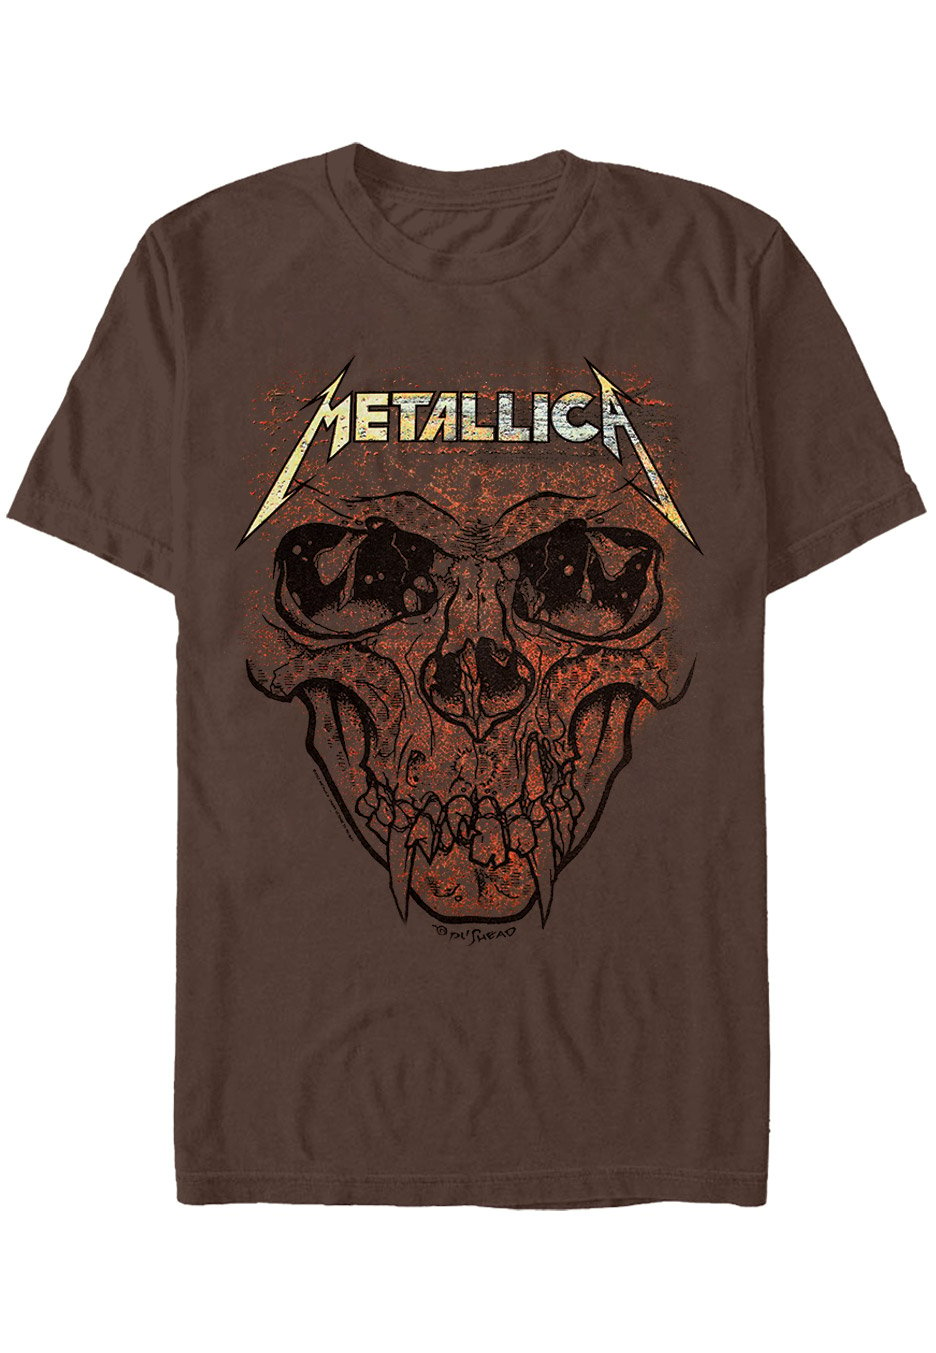 Metallica - Pushead Rusted Charcoal - T-Shirt